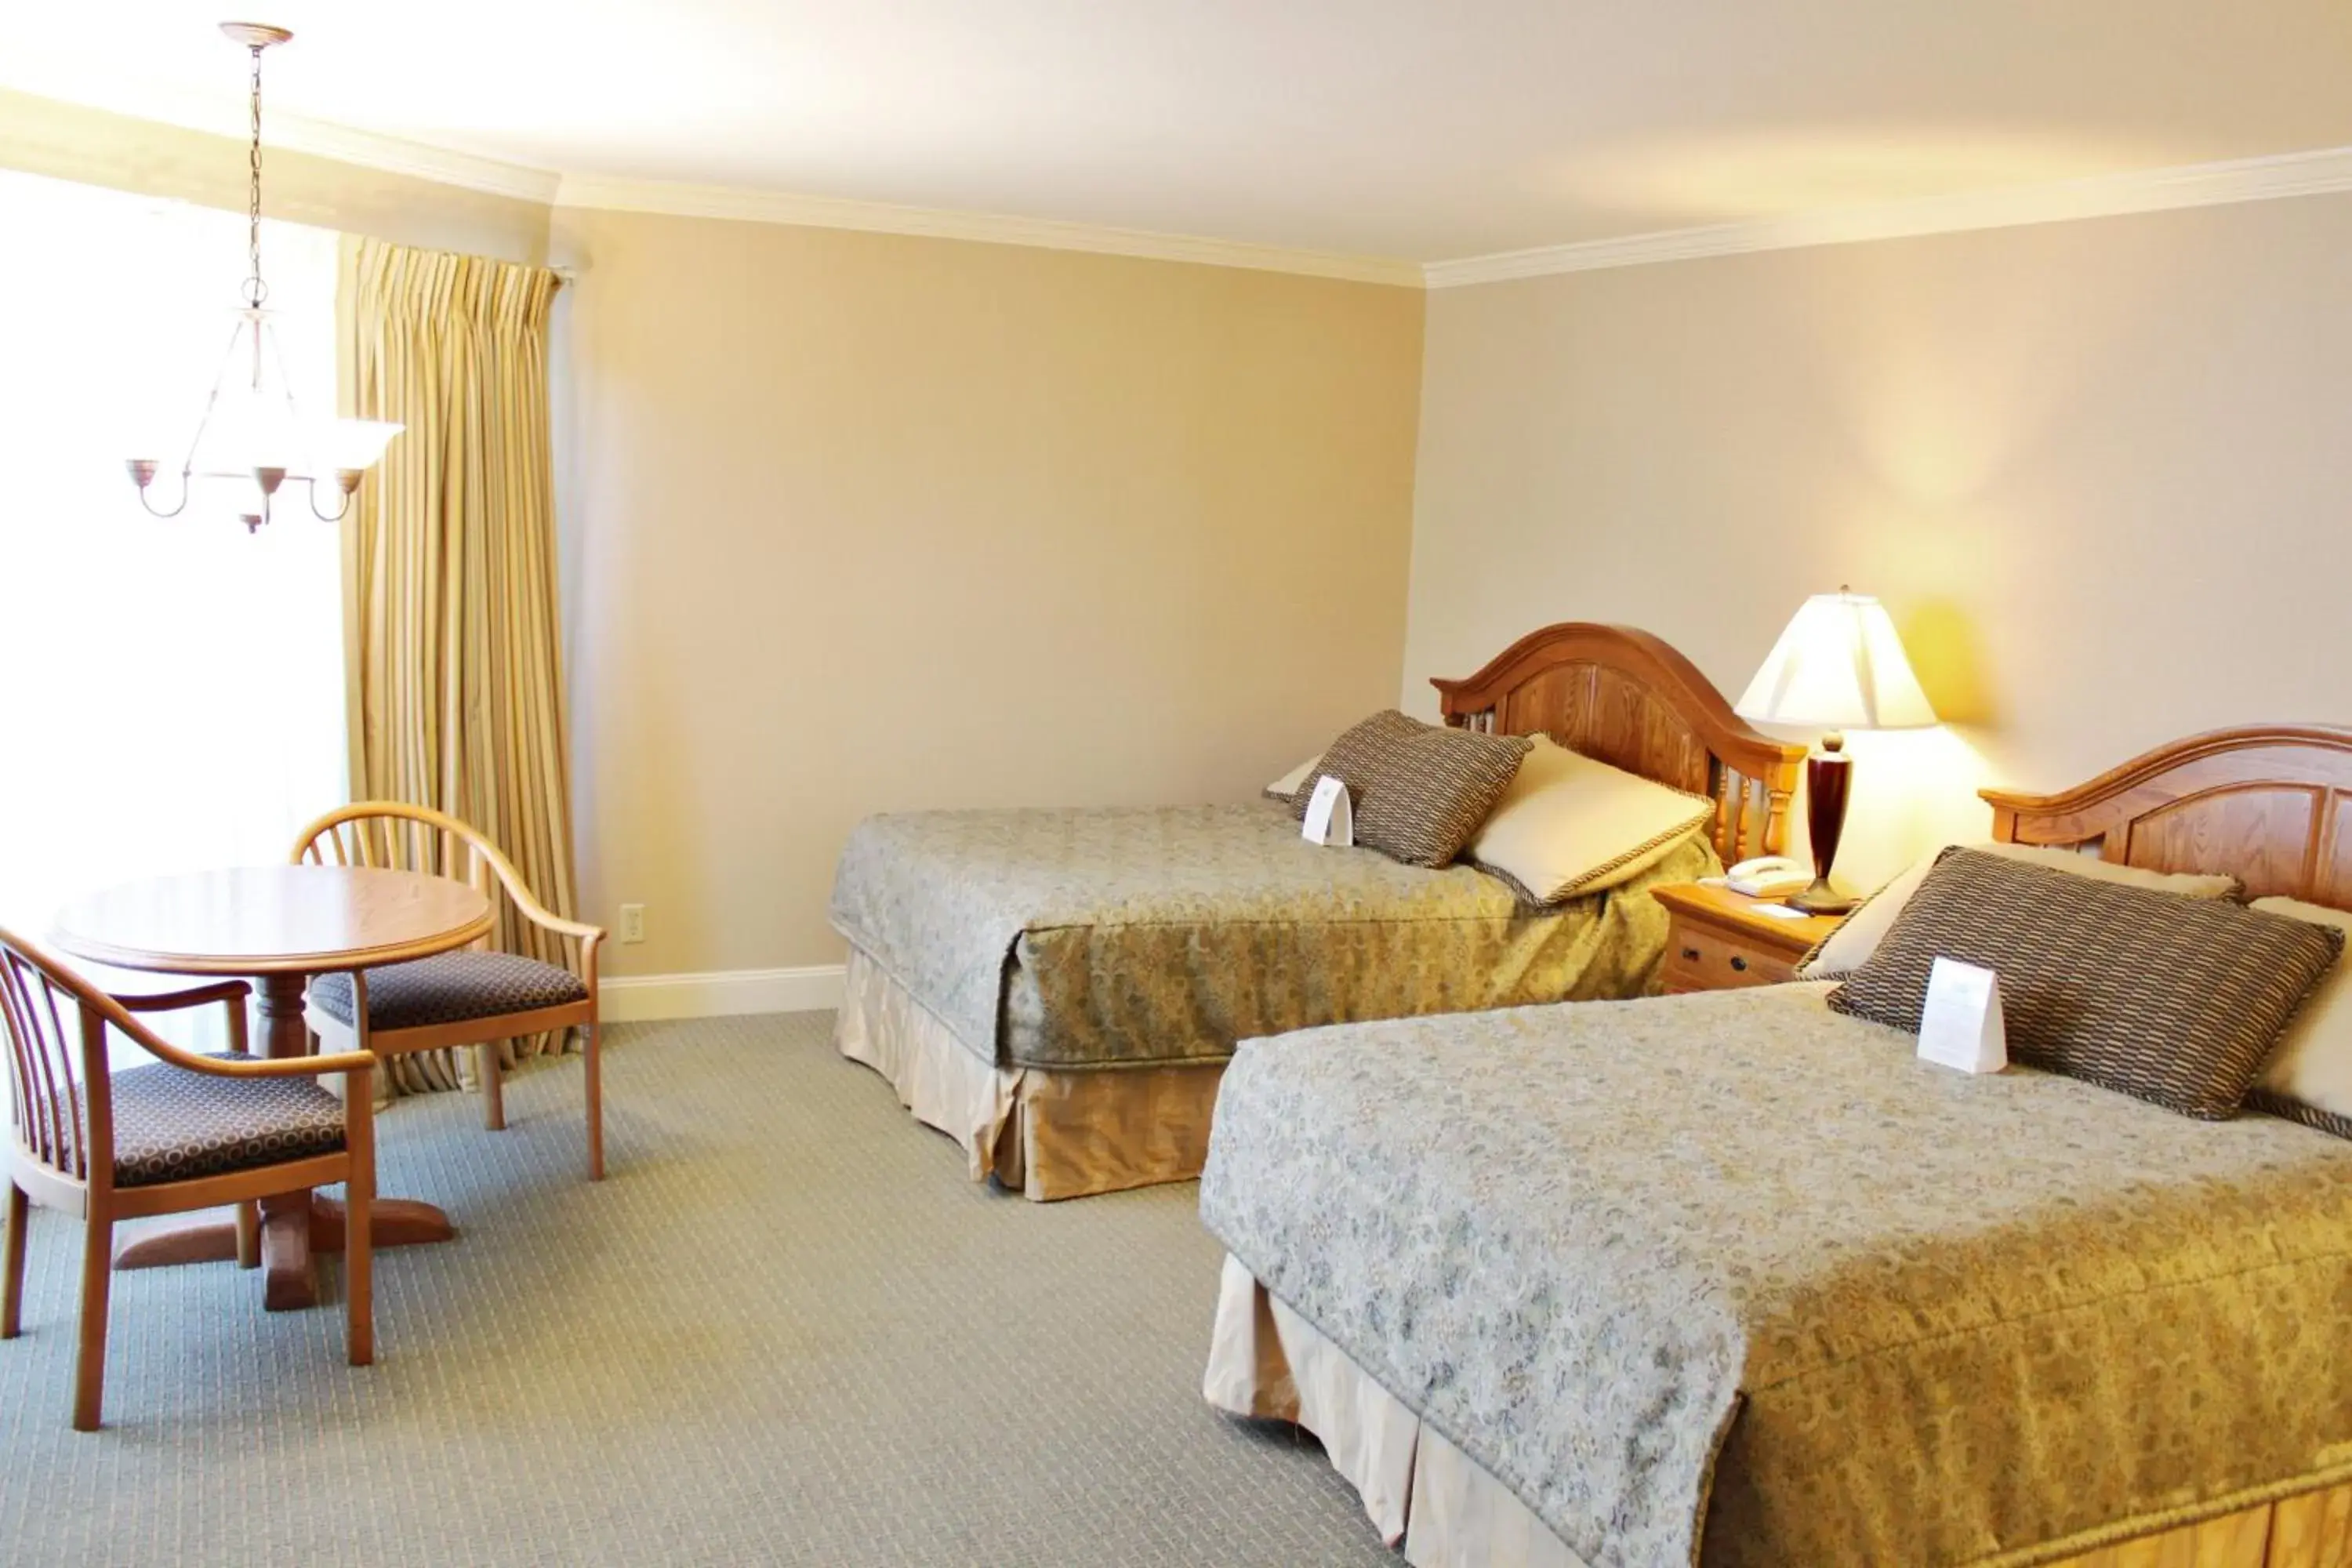 Bed, Room Photo in Columbus Inn